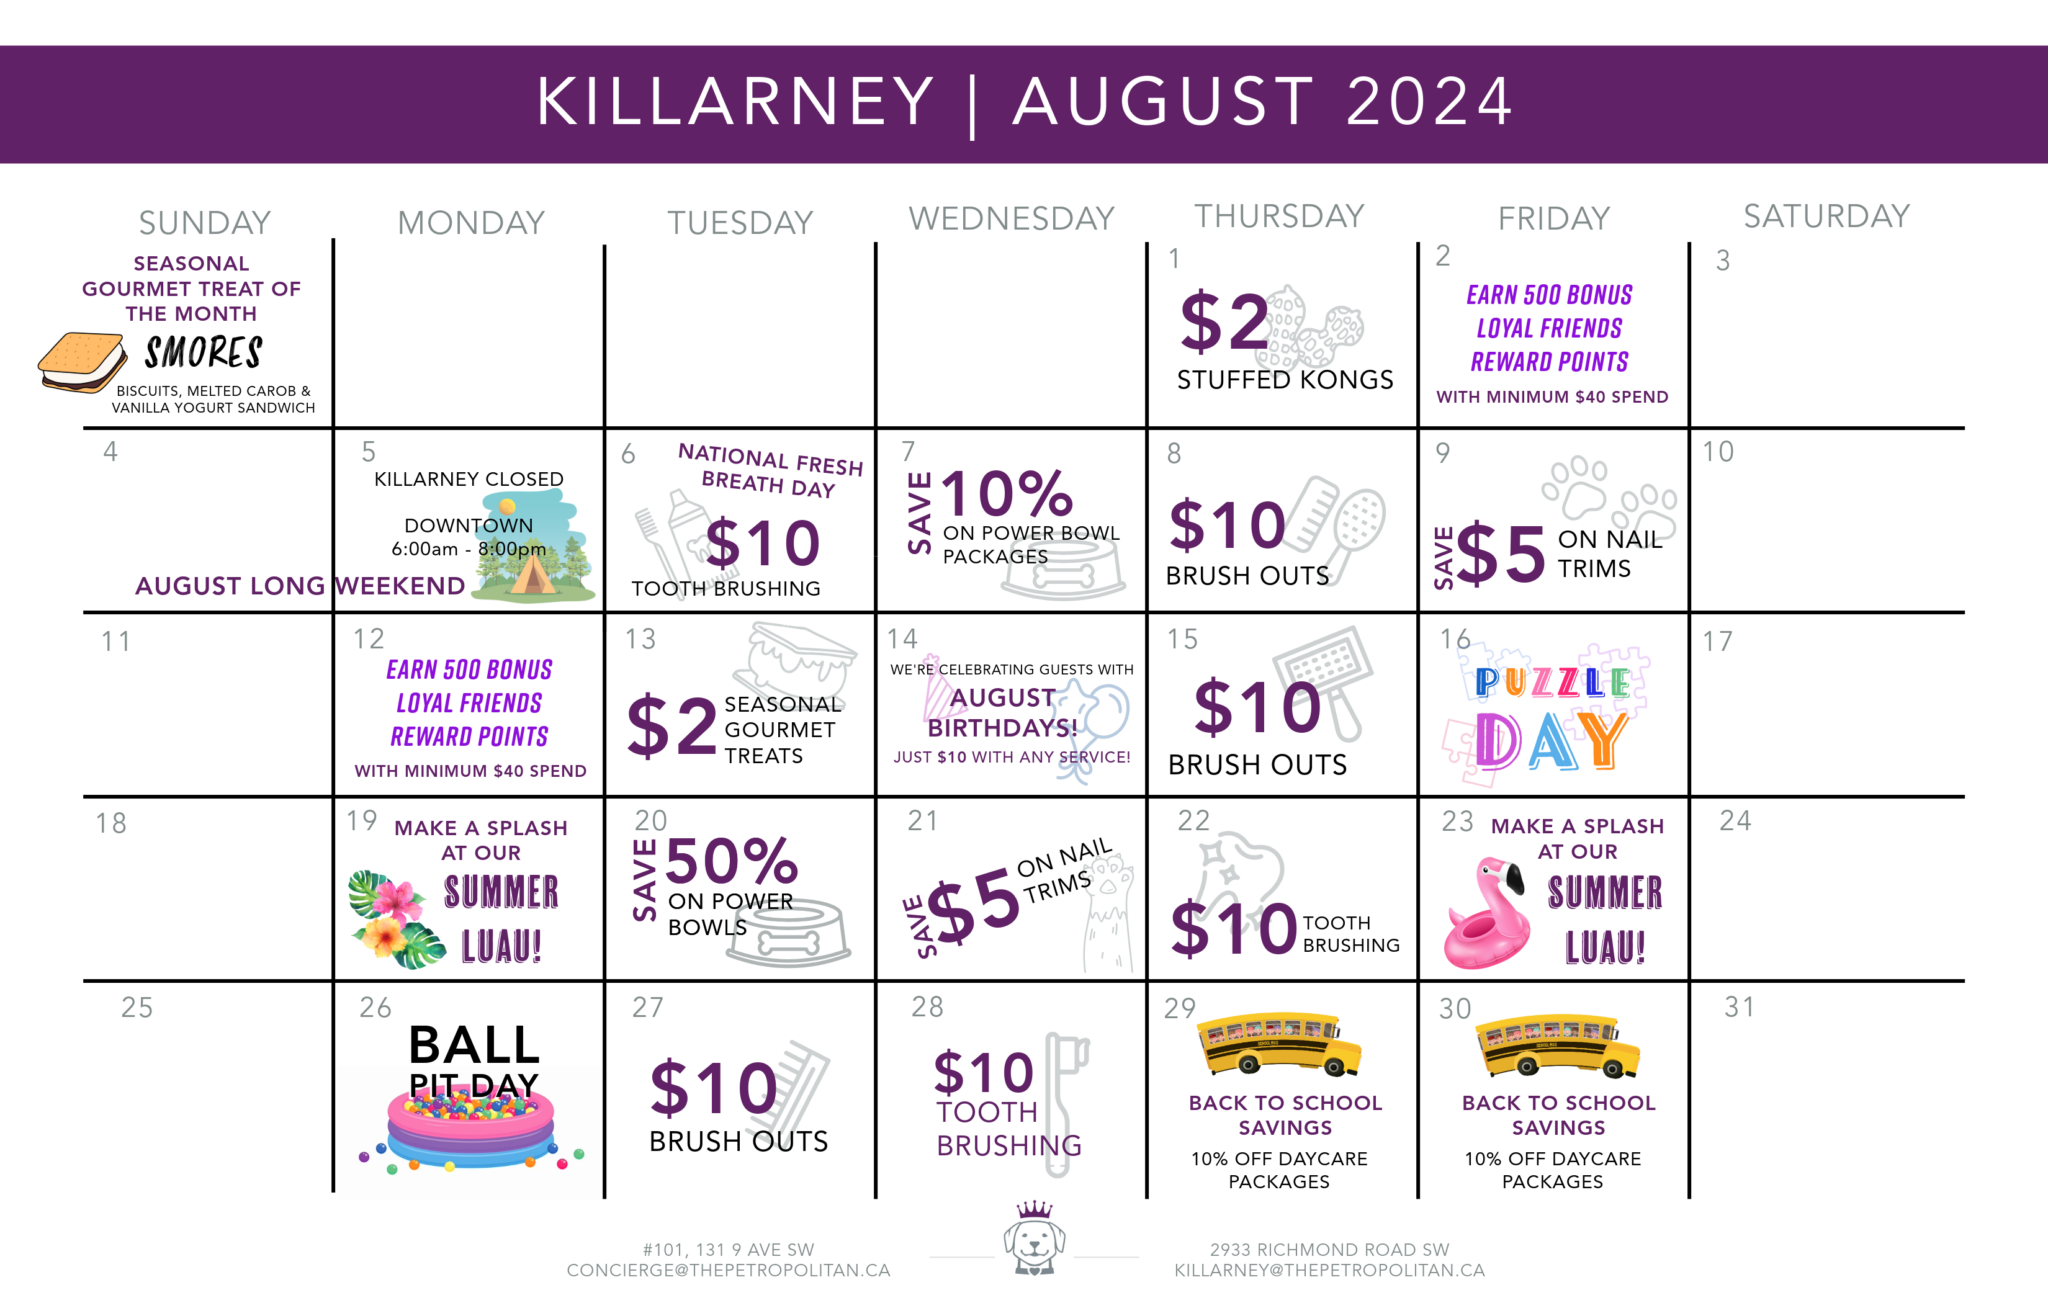 Event and Savings Calendar | Killarney August 2024